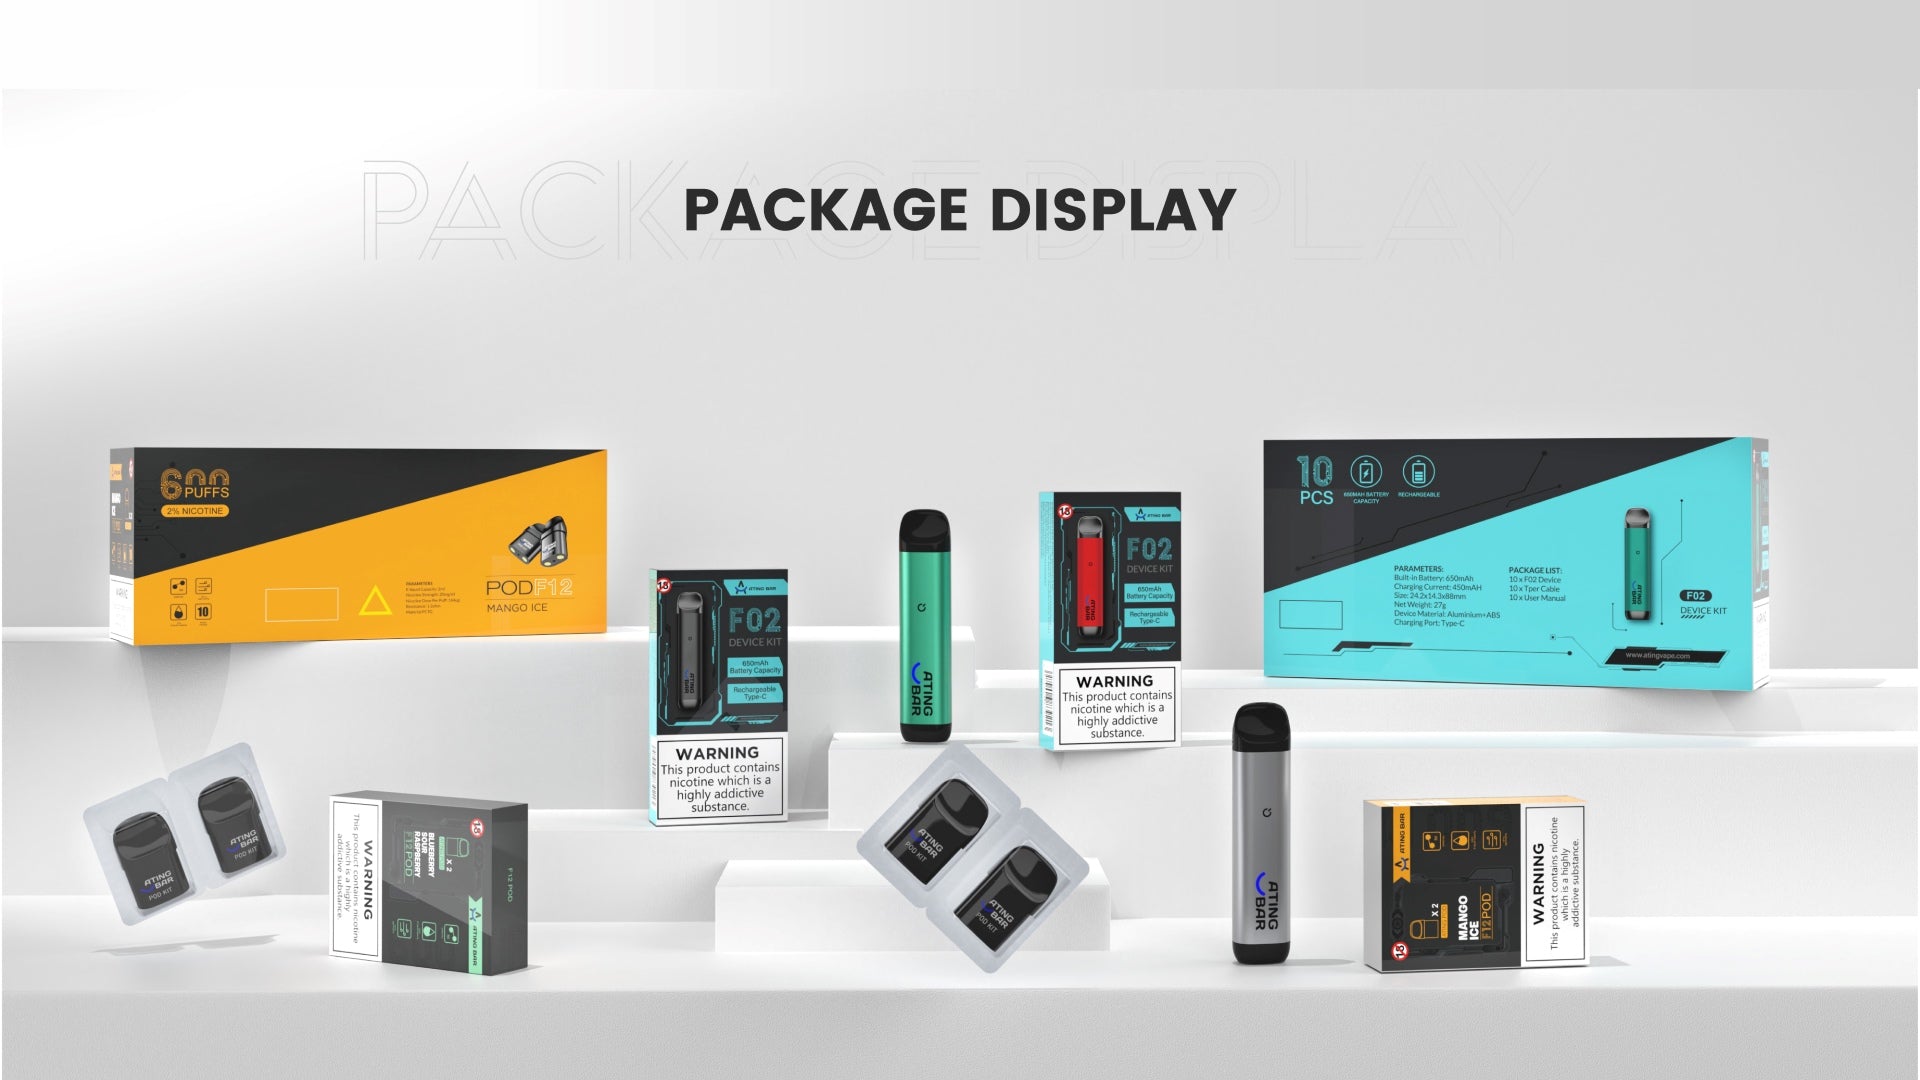 Package-Display-F02-Closed-Vape-Pod-Kit-Pod-Cartridge